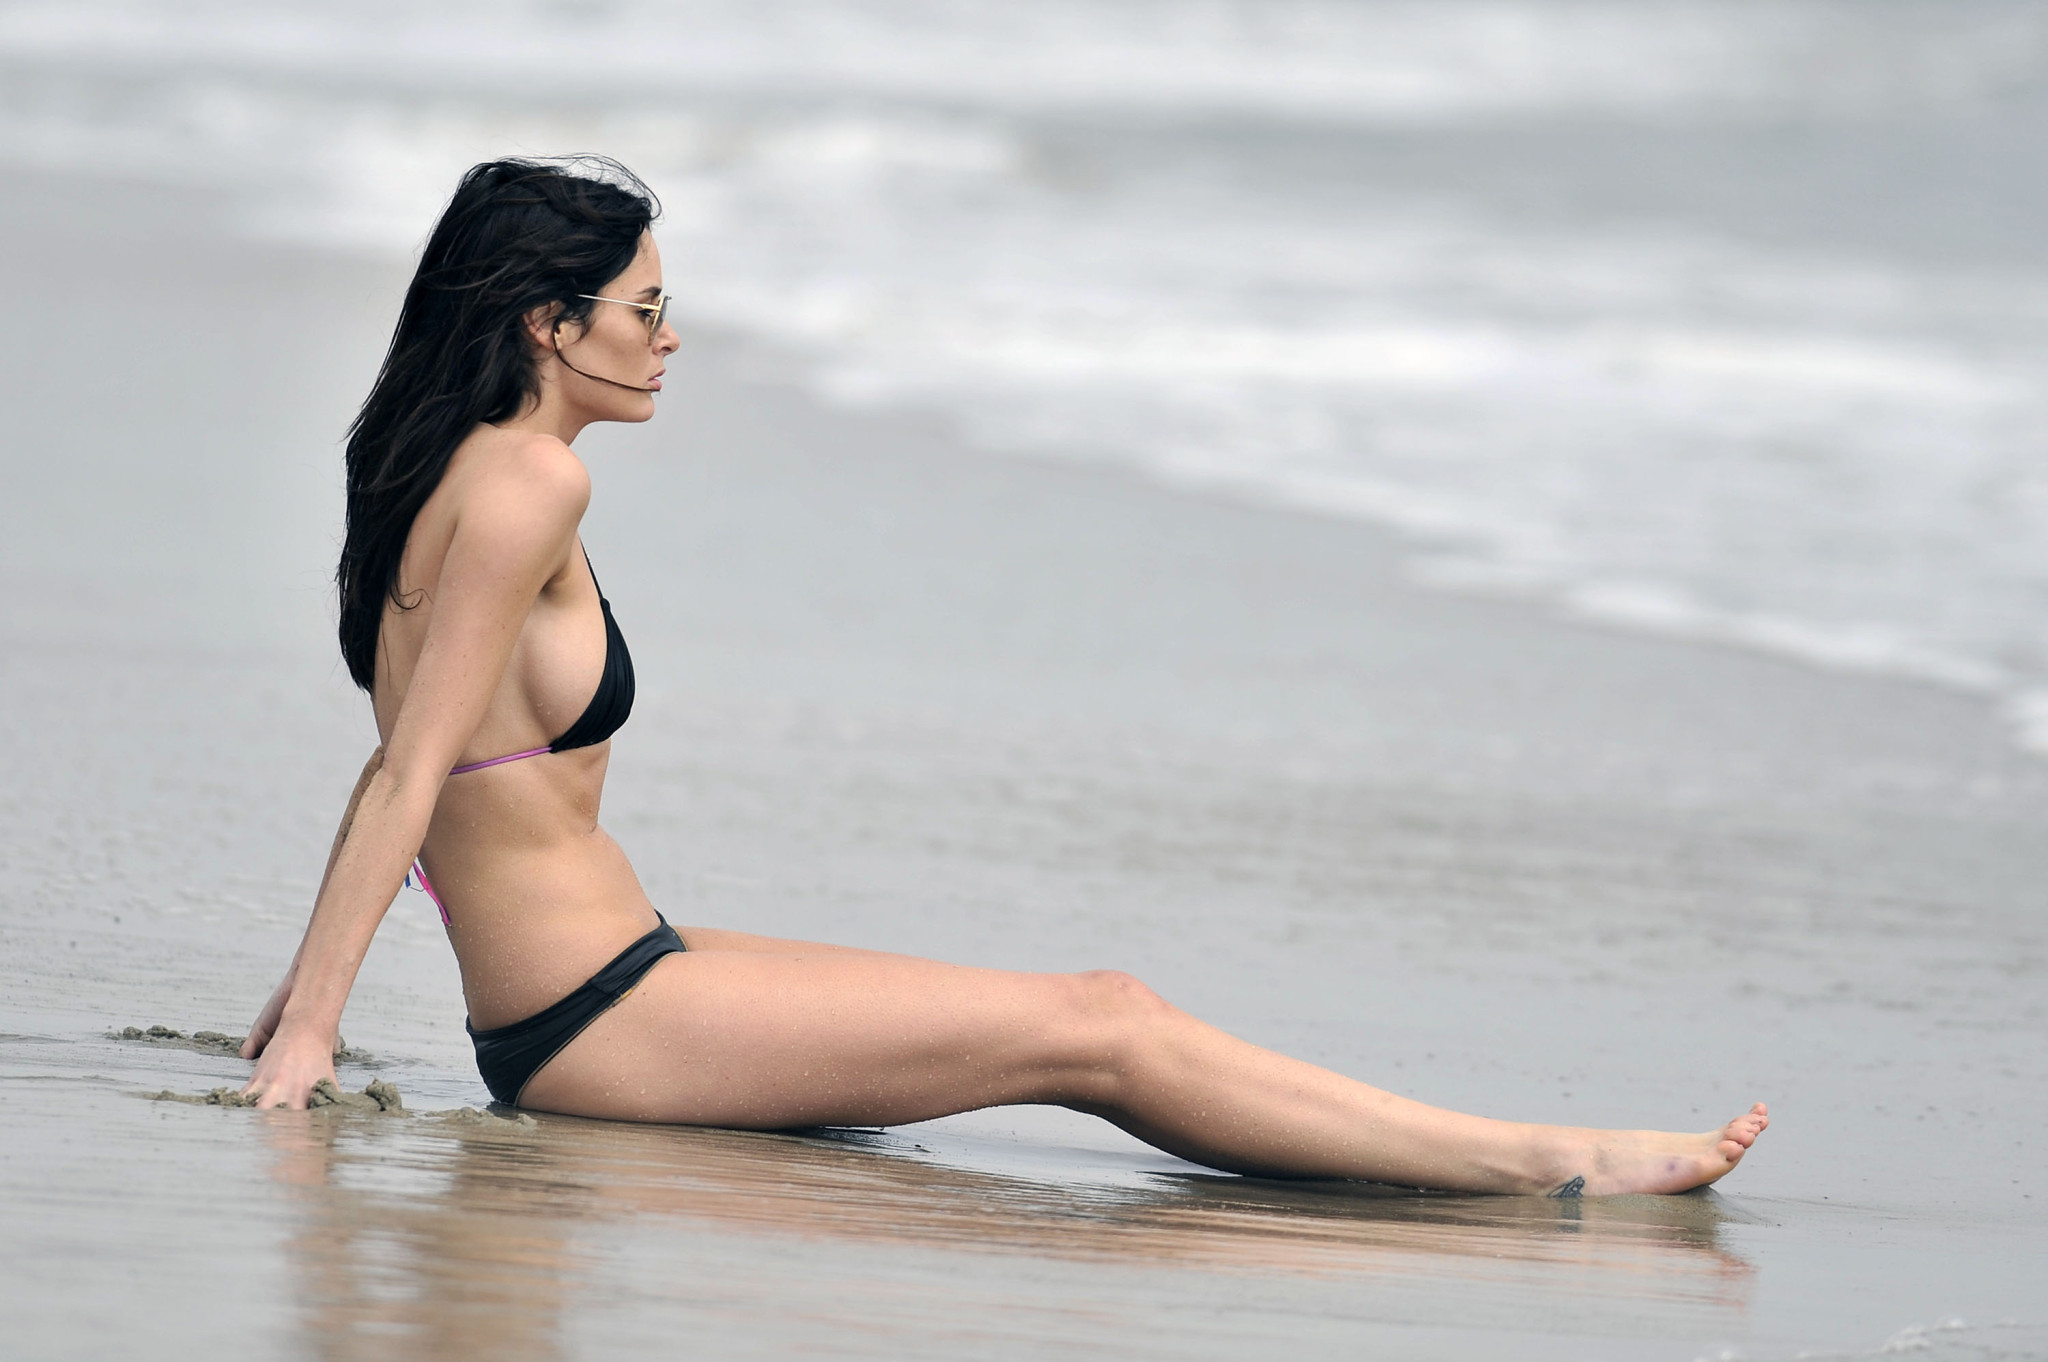 Nicole trunfio luciendo un sexy bikini negro en una playa de malibu
 #75262628